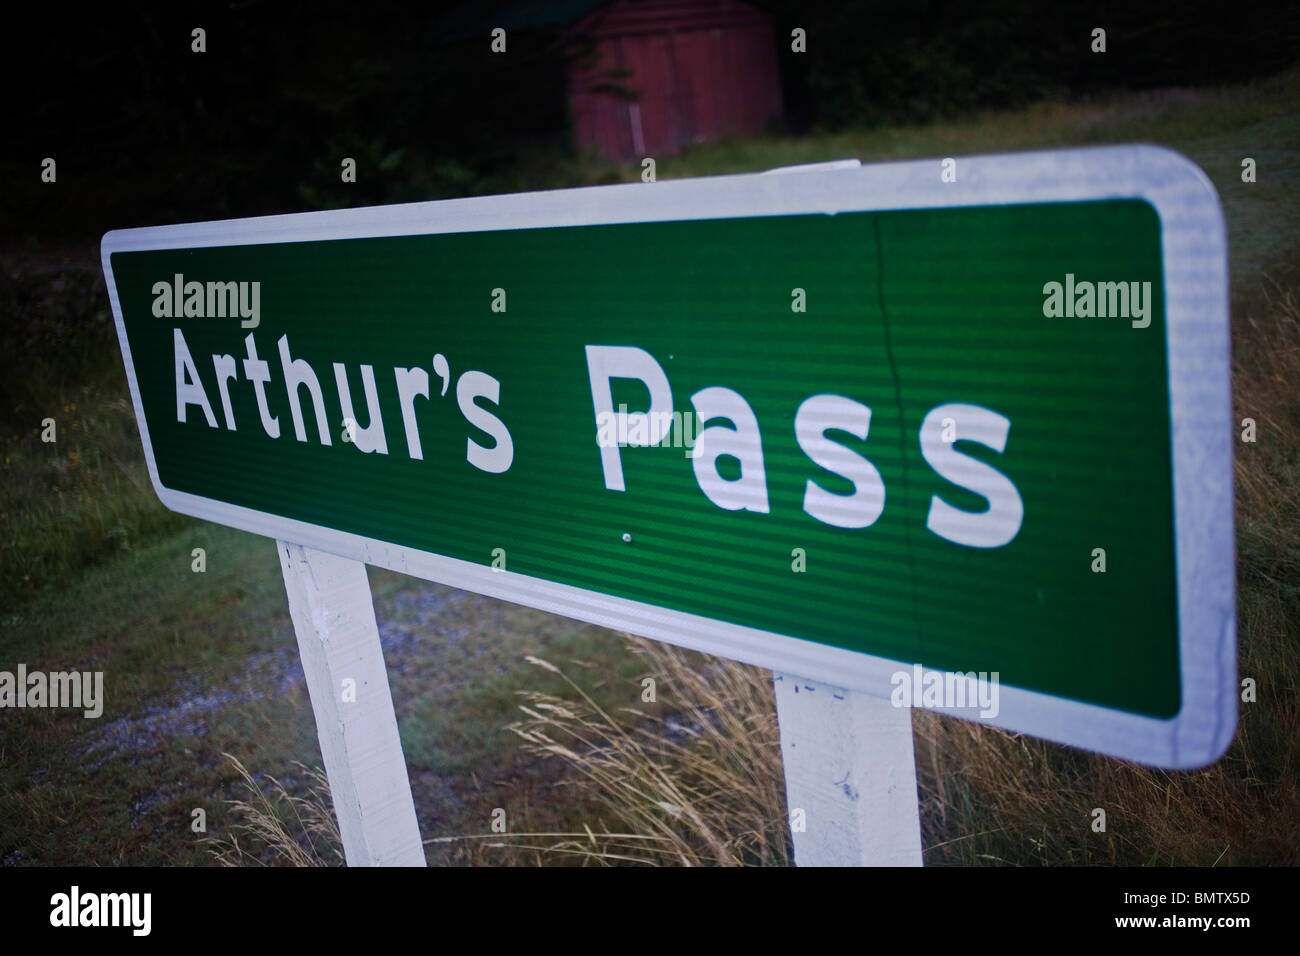 Arthur's Pass road sign, New Zealand. Stock Photo